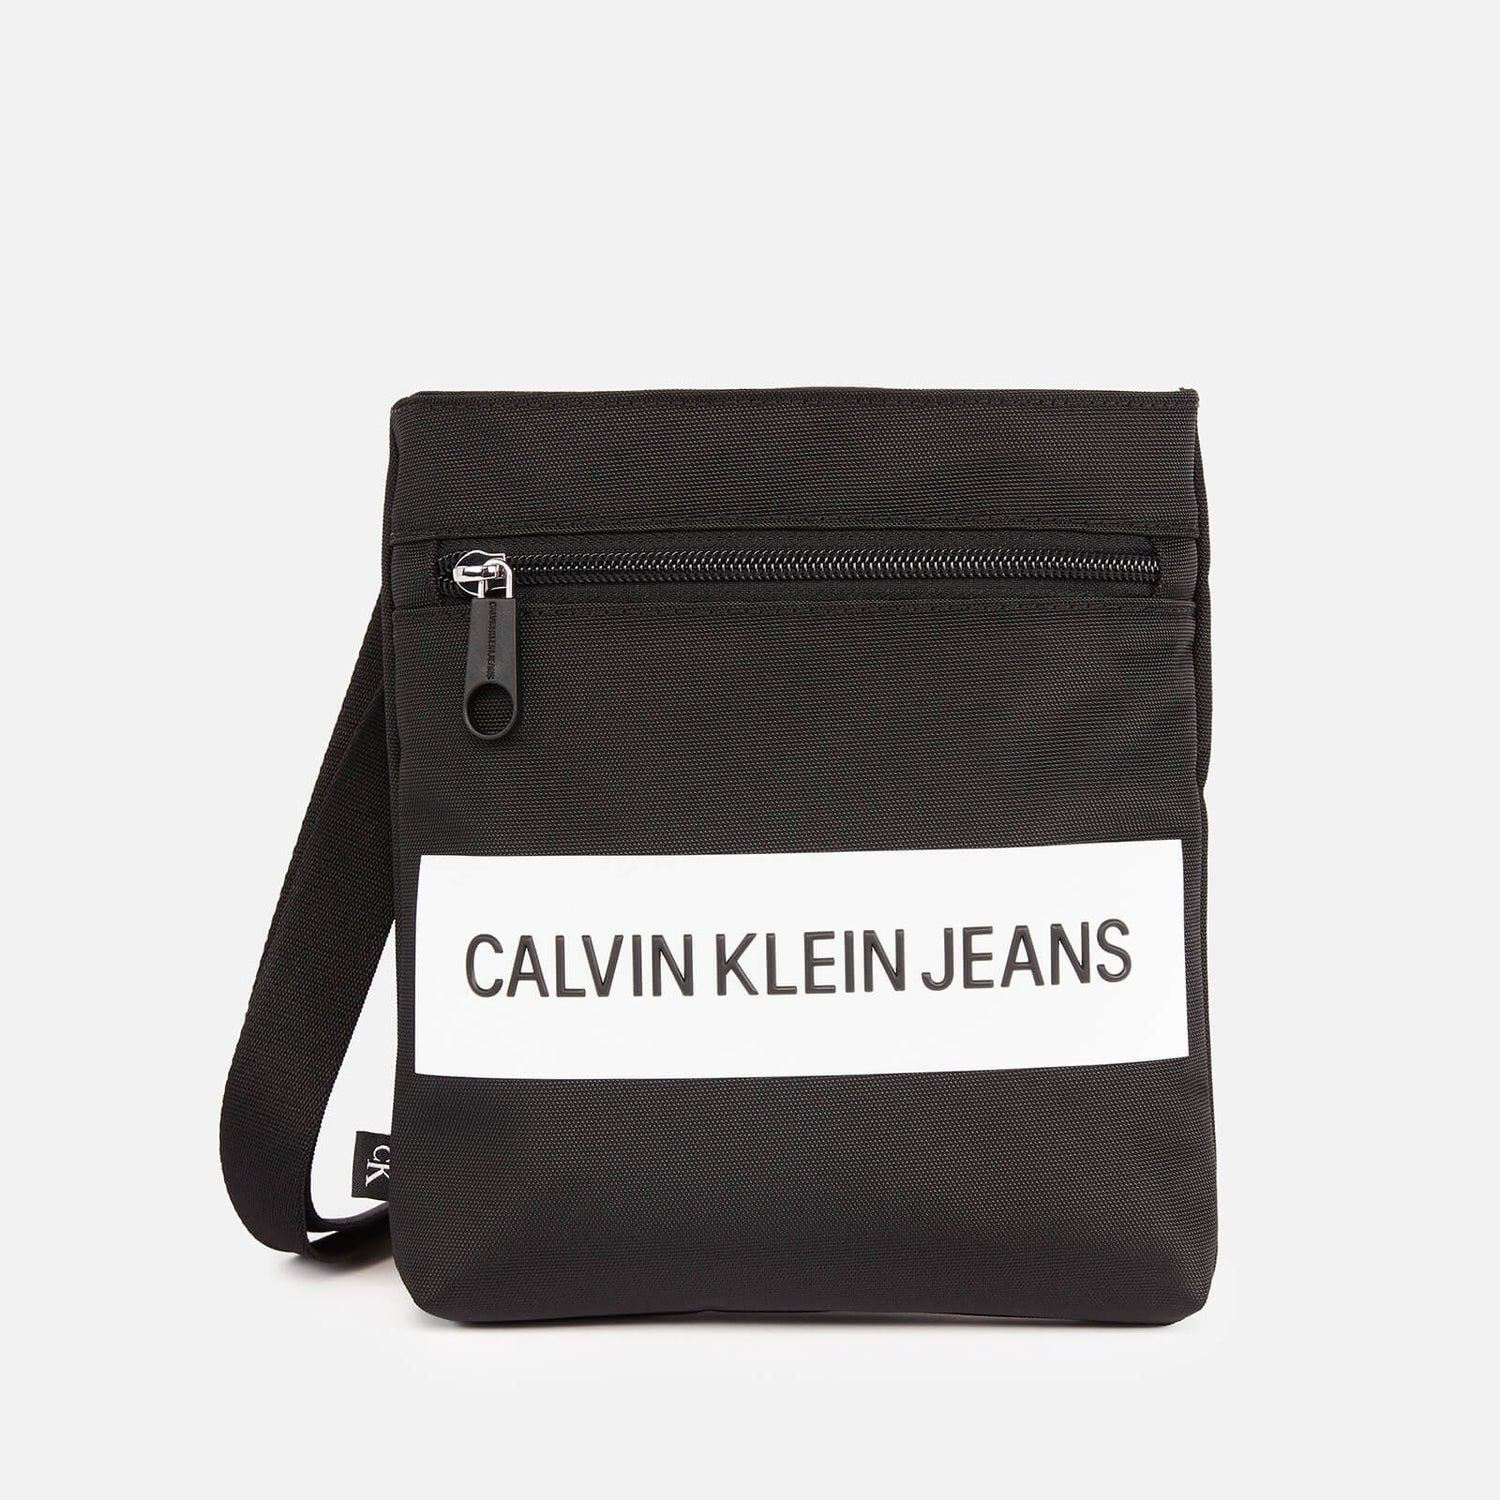 Calvin Klein Jeans Men's Micro Flatpack - Black | TheHut.com